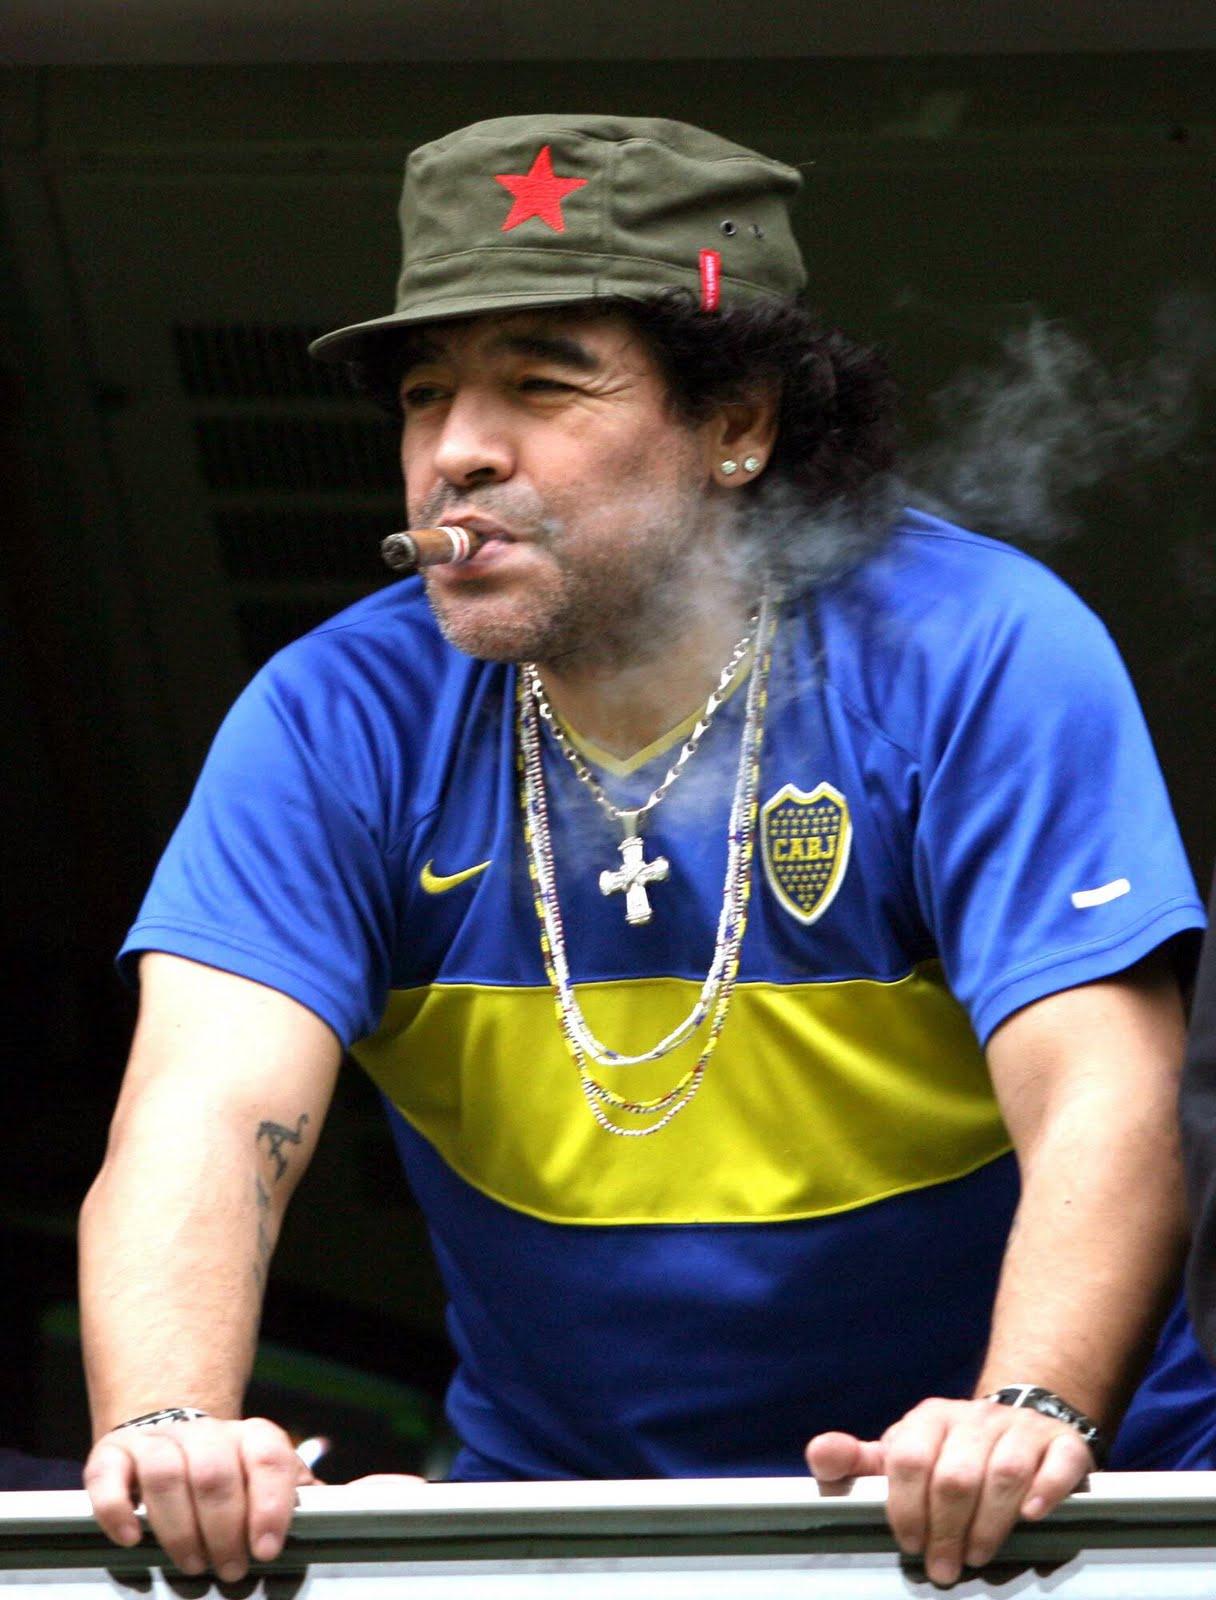 Wallpaper Justin Bieber: World Famous Football Player Diego Maradona